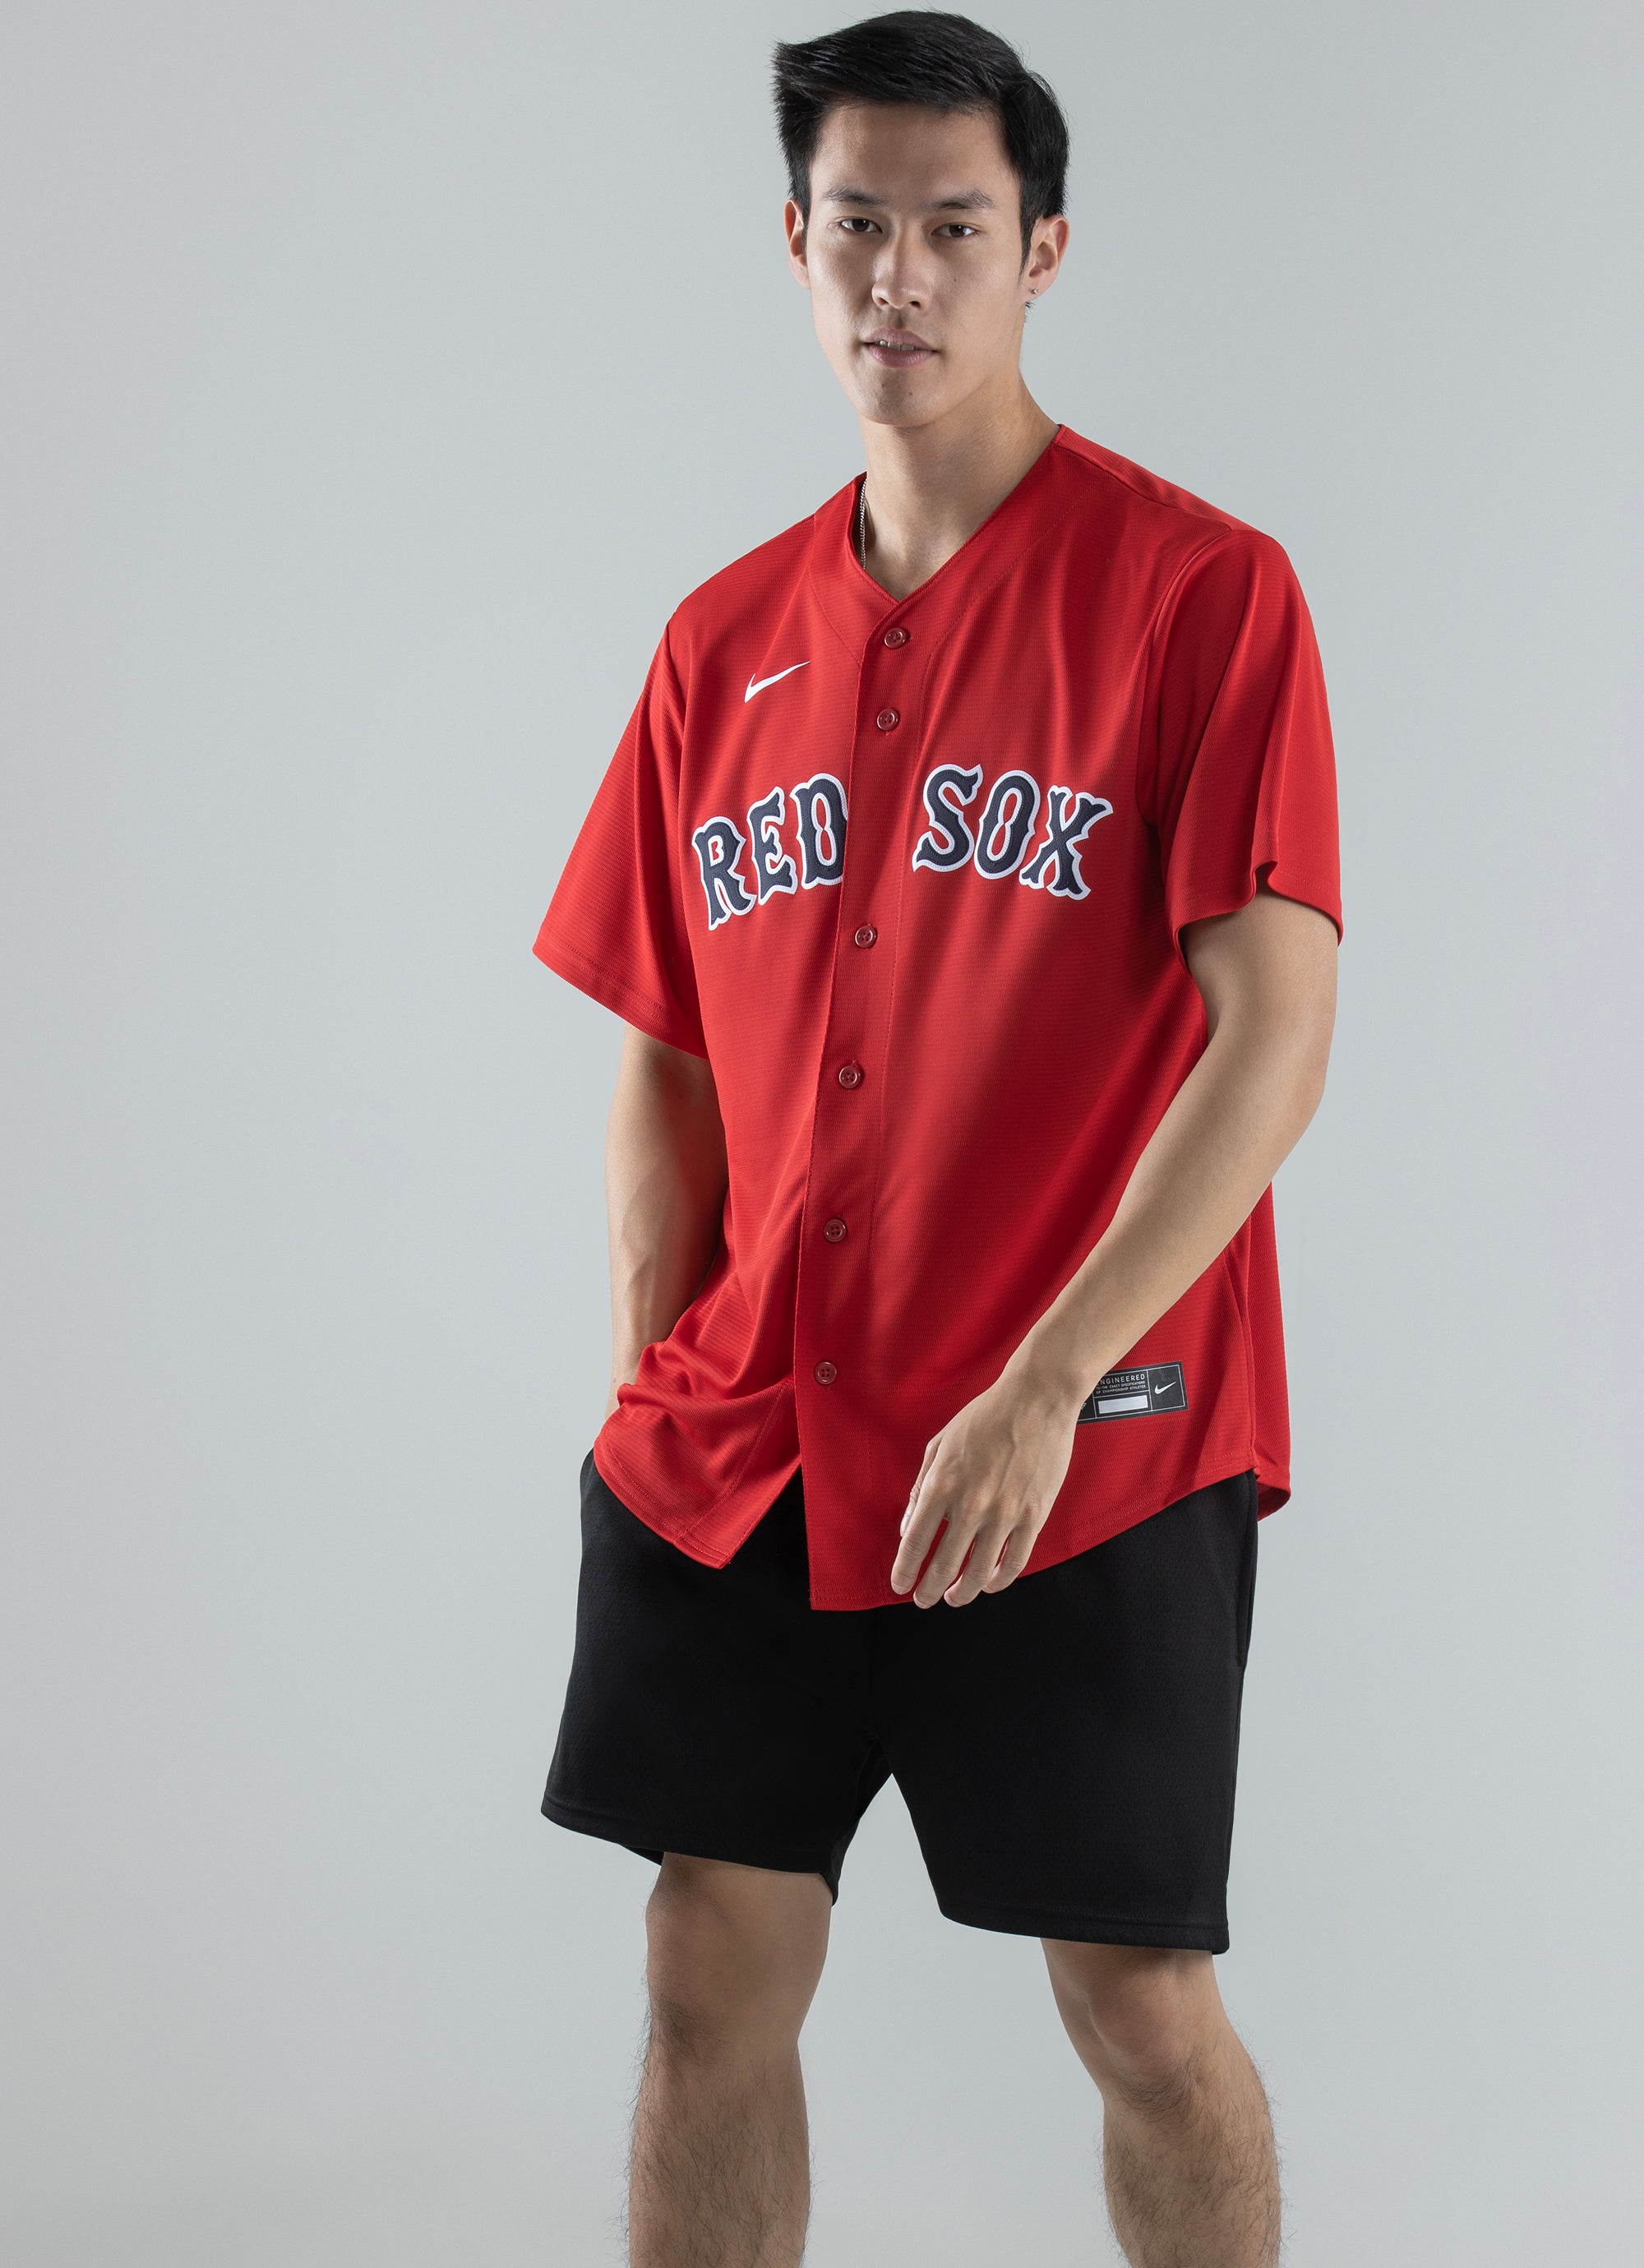 BOSTON RED SOX MLB MAJESTIC SHIRT L Other Shirts  Baseball  ClassicShirts com